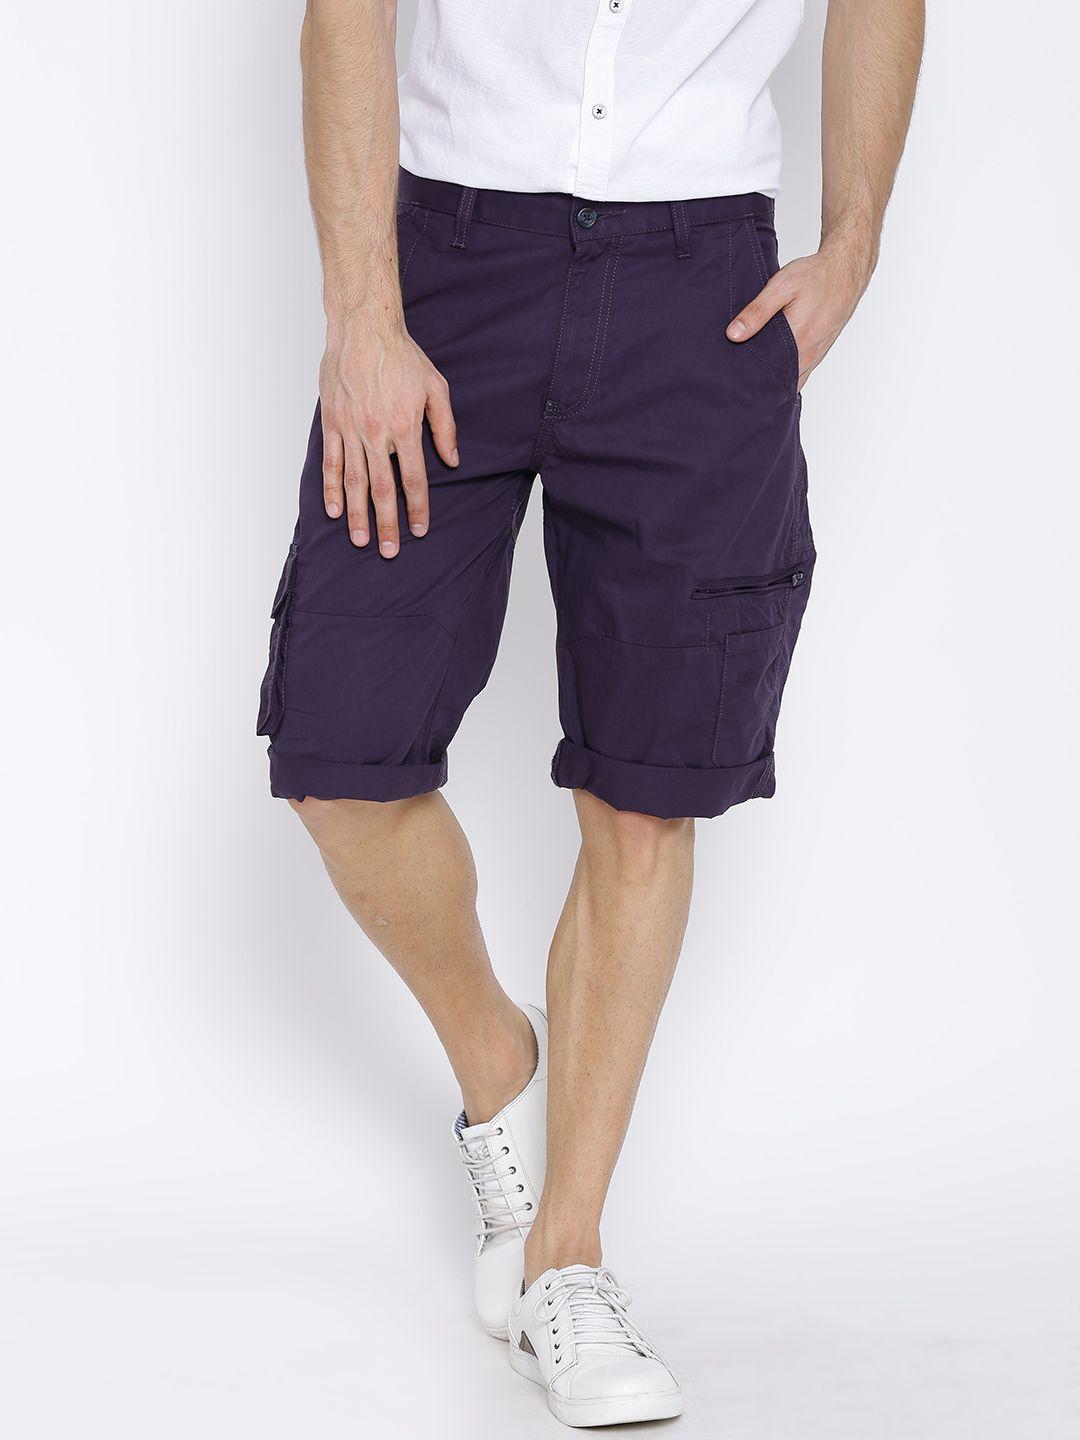 locomotive purple cargo shorts